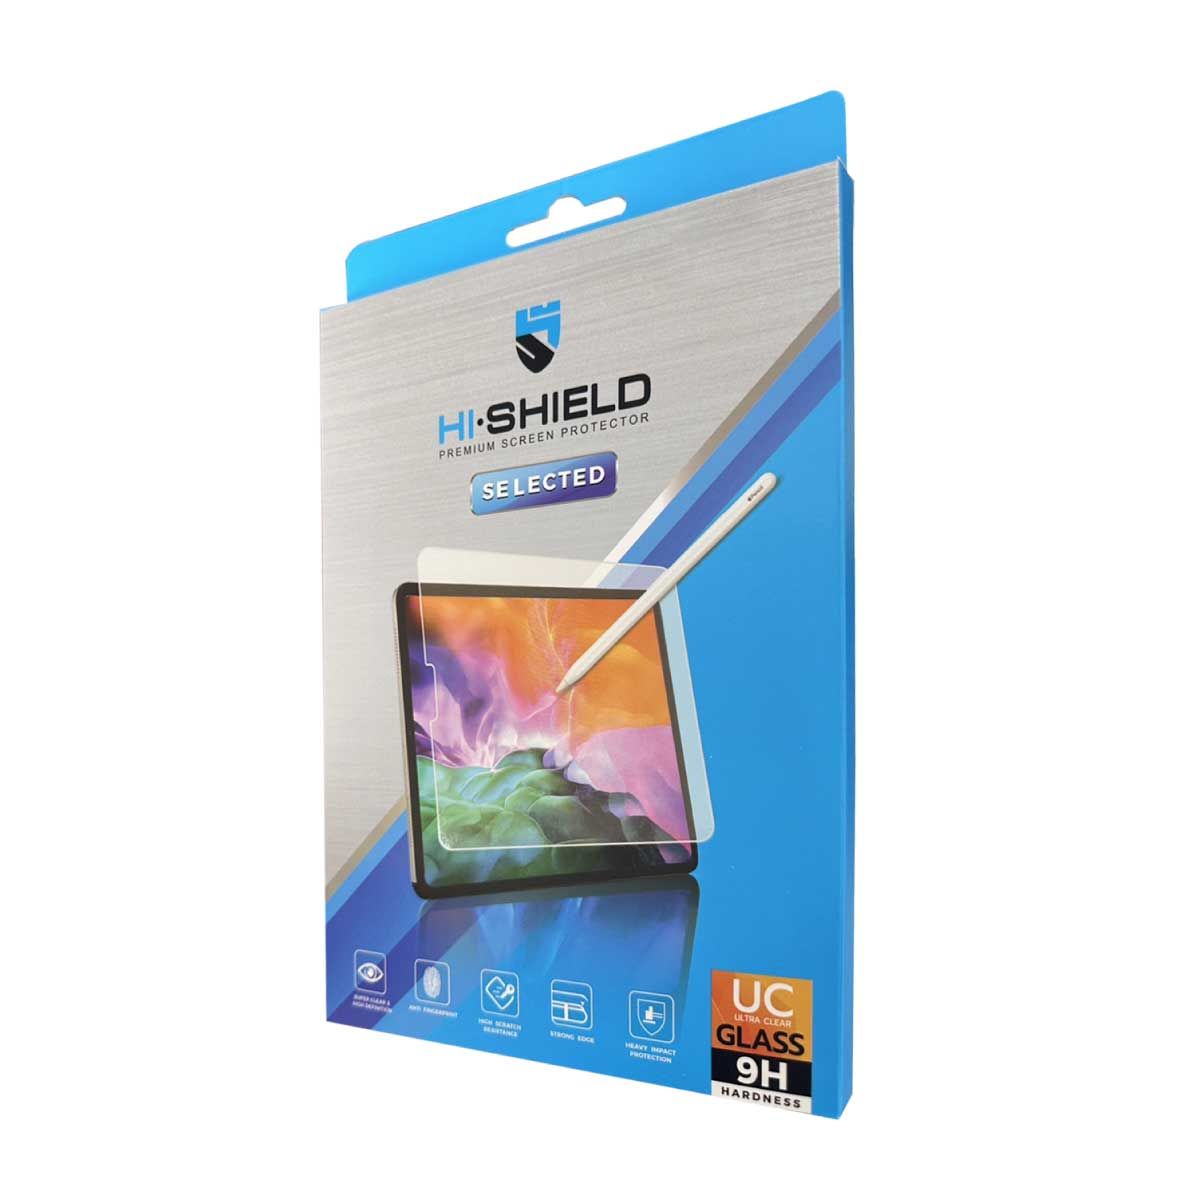 Hi-Shield TG SELECTED ฟิล์มกระจก เต็มจอ สำหรับ Samsung Galaxy Tab S9|Tab S8 | Galaxy Tab S7